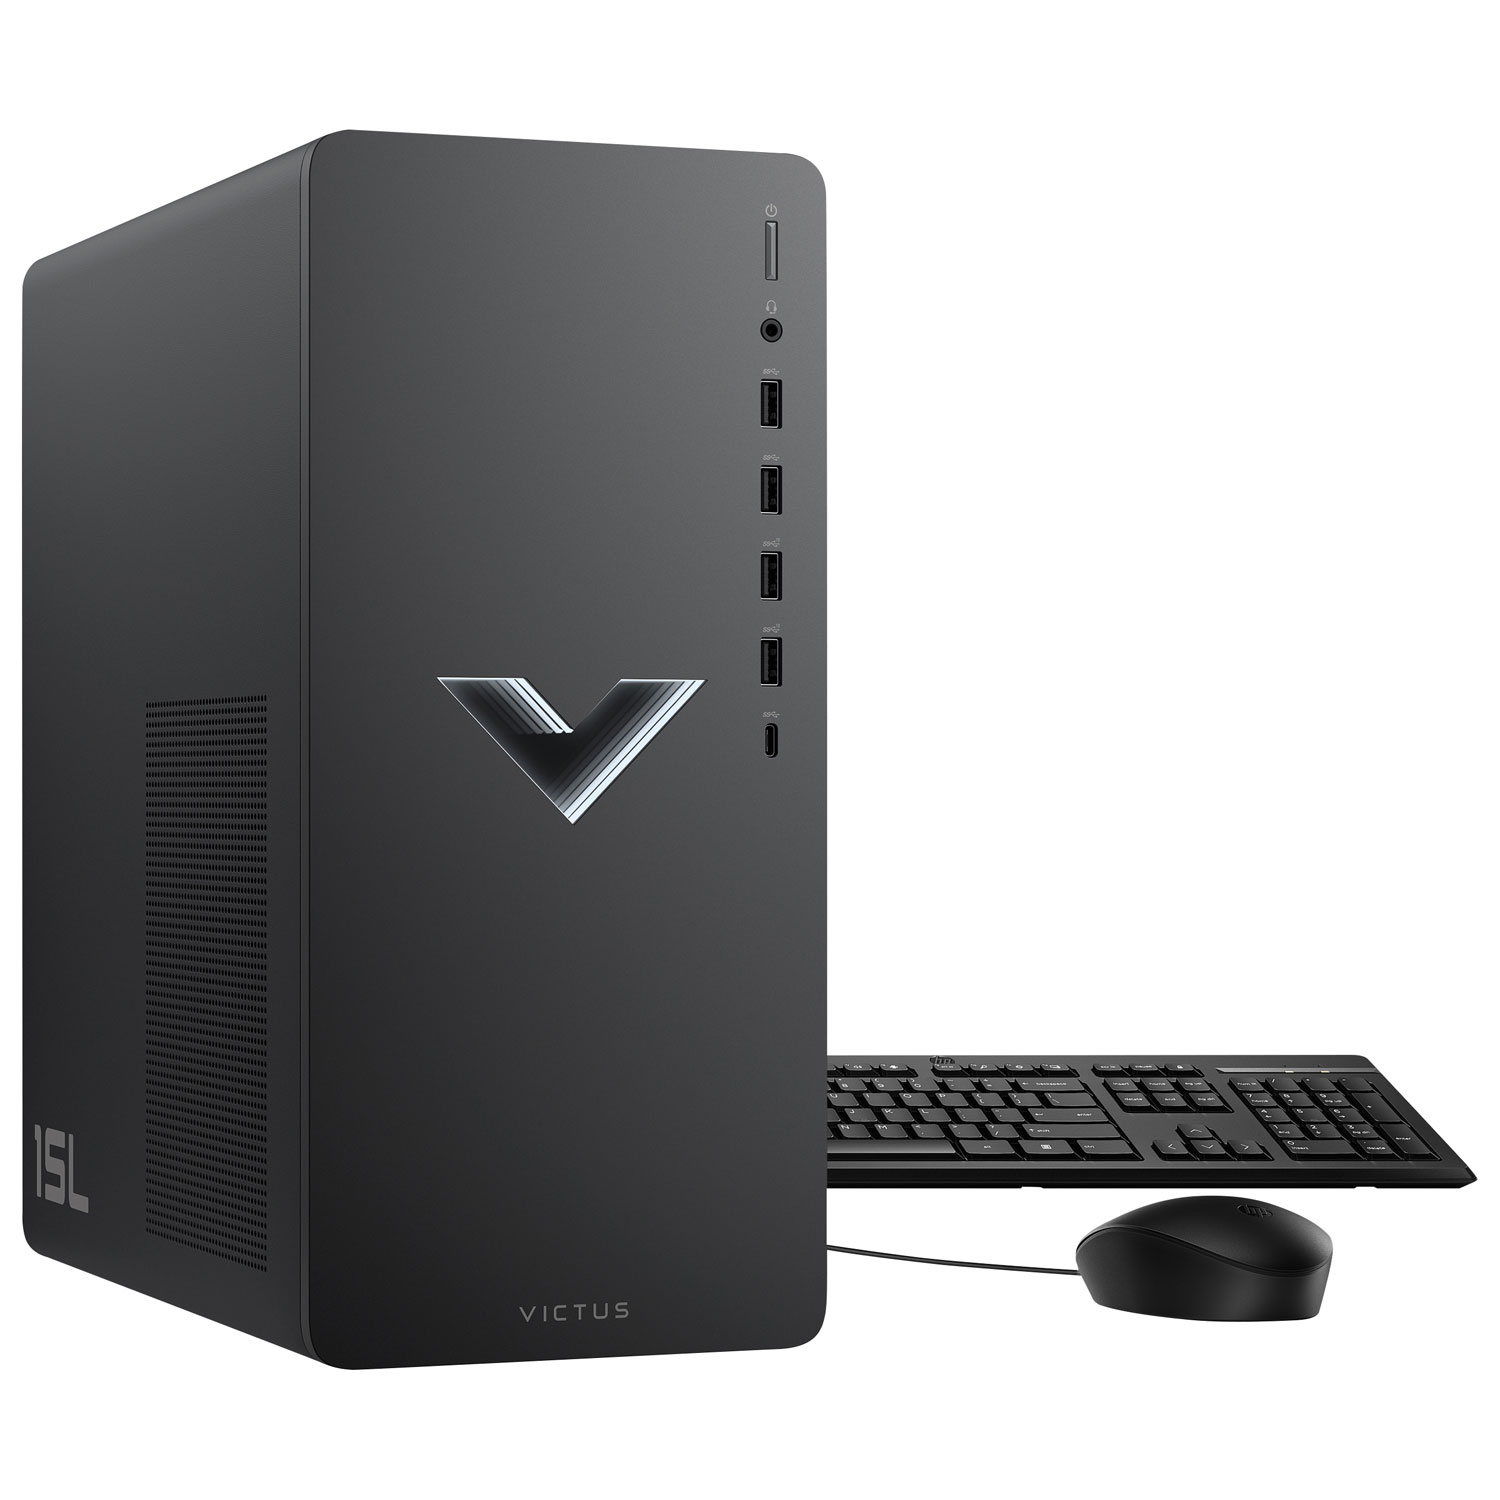 HP Victus Gaming PC (AMD Ryzen 55600G/512GB SSD/12GB RAM/GeForce RTX 3050) - Only at Best Buy